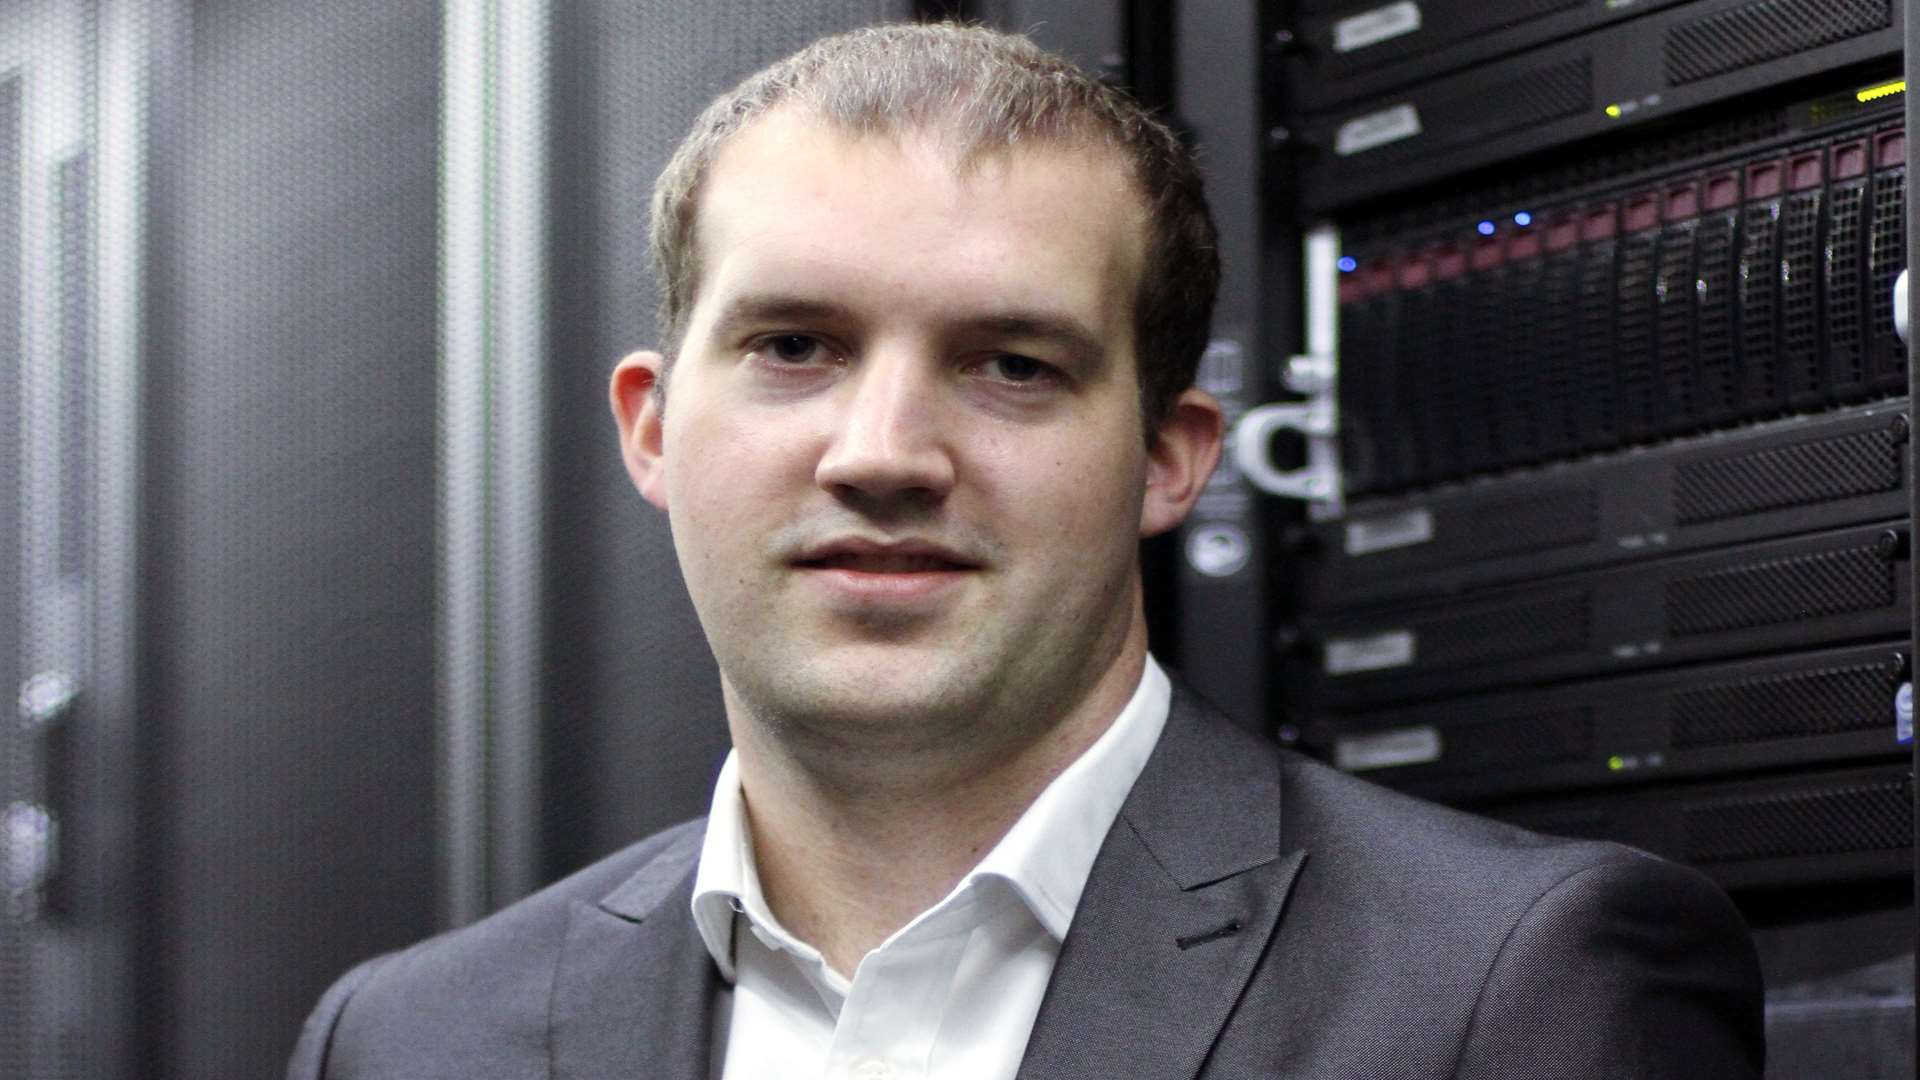 VooServers founder and technical director Matt Parkinson